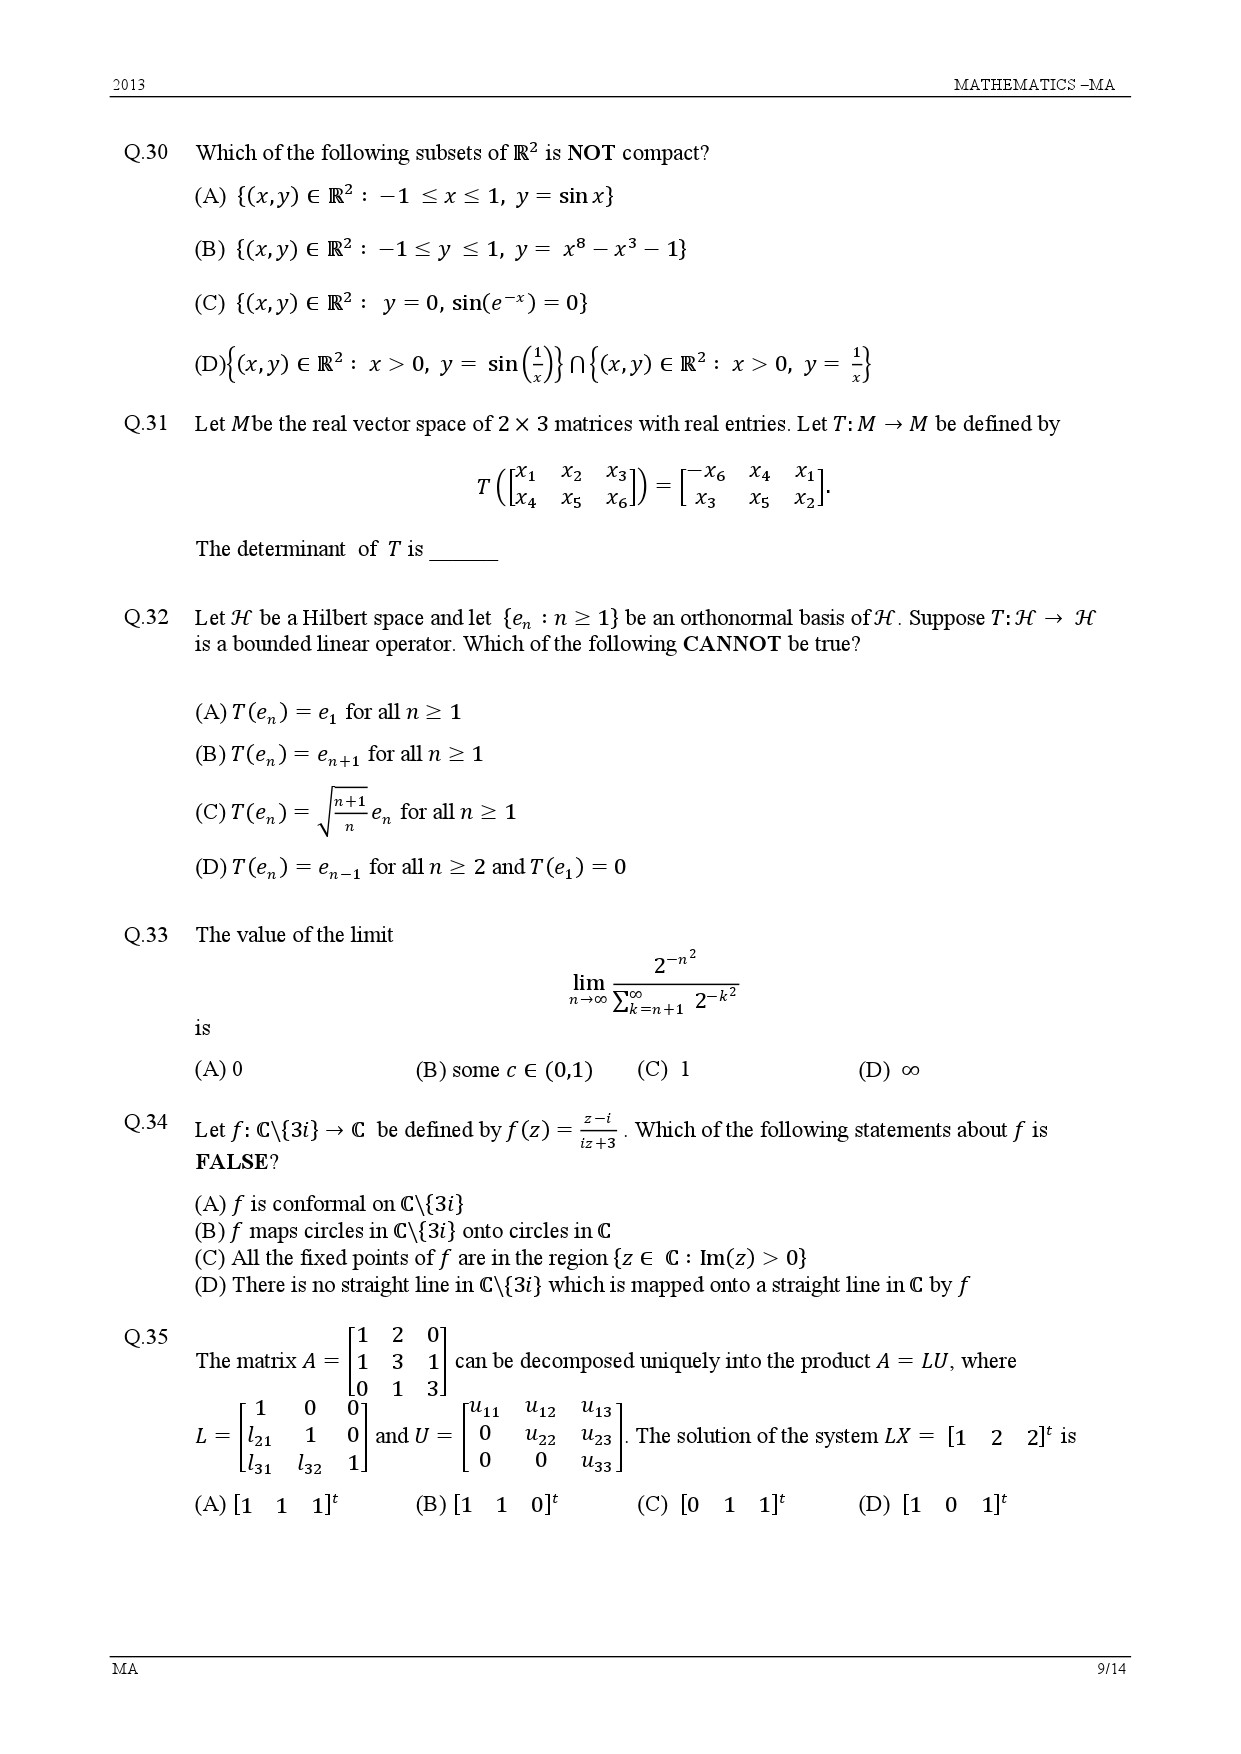 GATE Exam Question Paper 2013 Mathematics 9